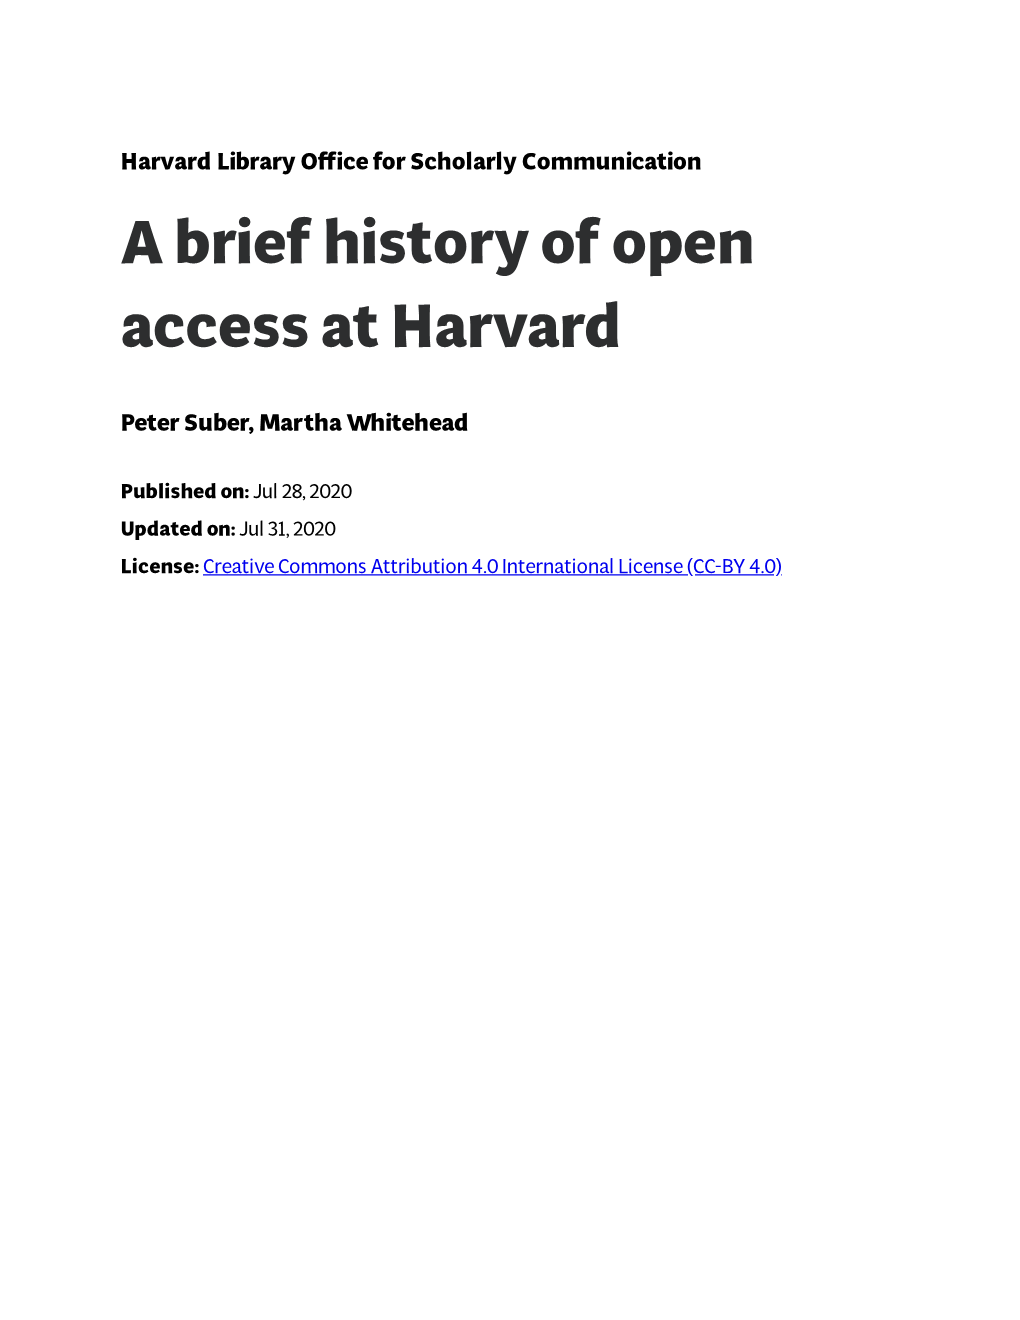 A Brief History of Open Access at Harvard